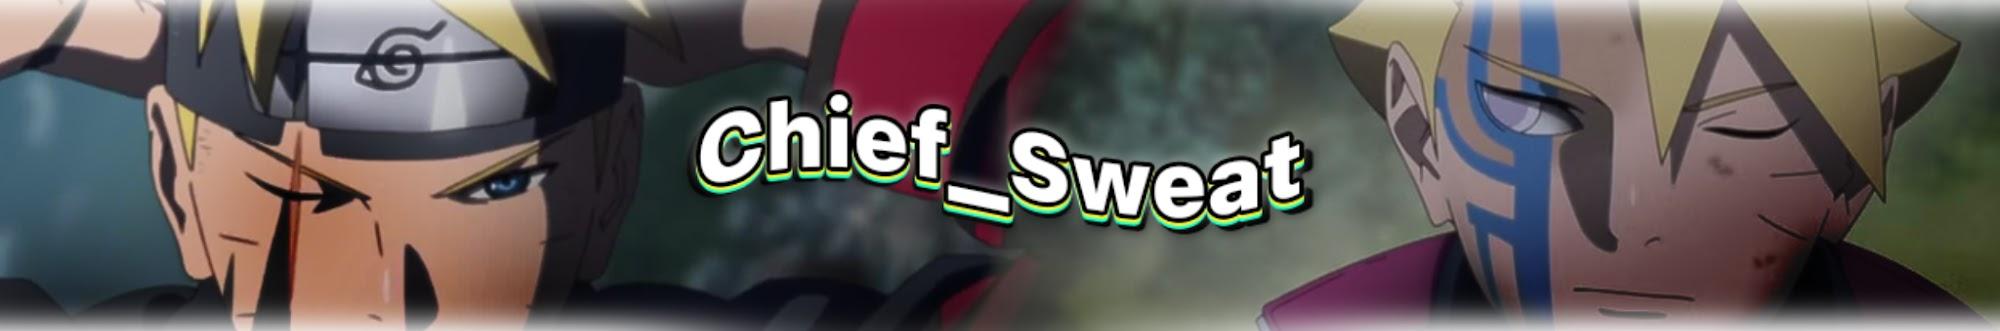 Chief_Sweat